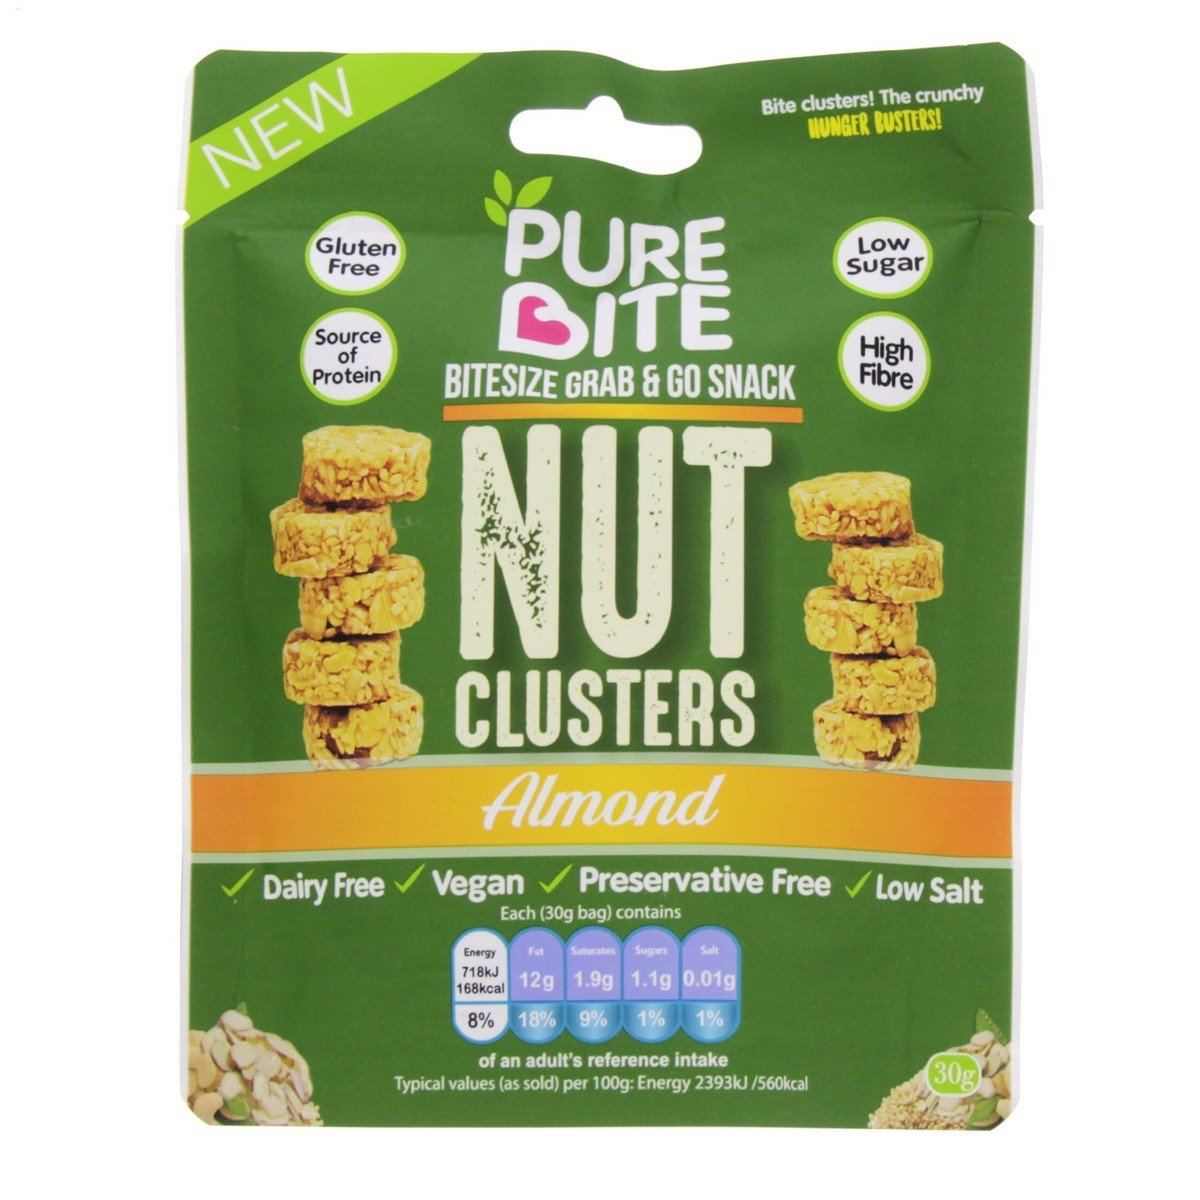 Pure Bite Nut Clusters Almond Gluten Free 30 g